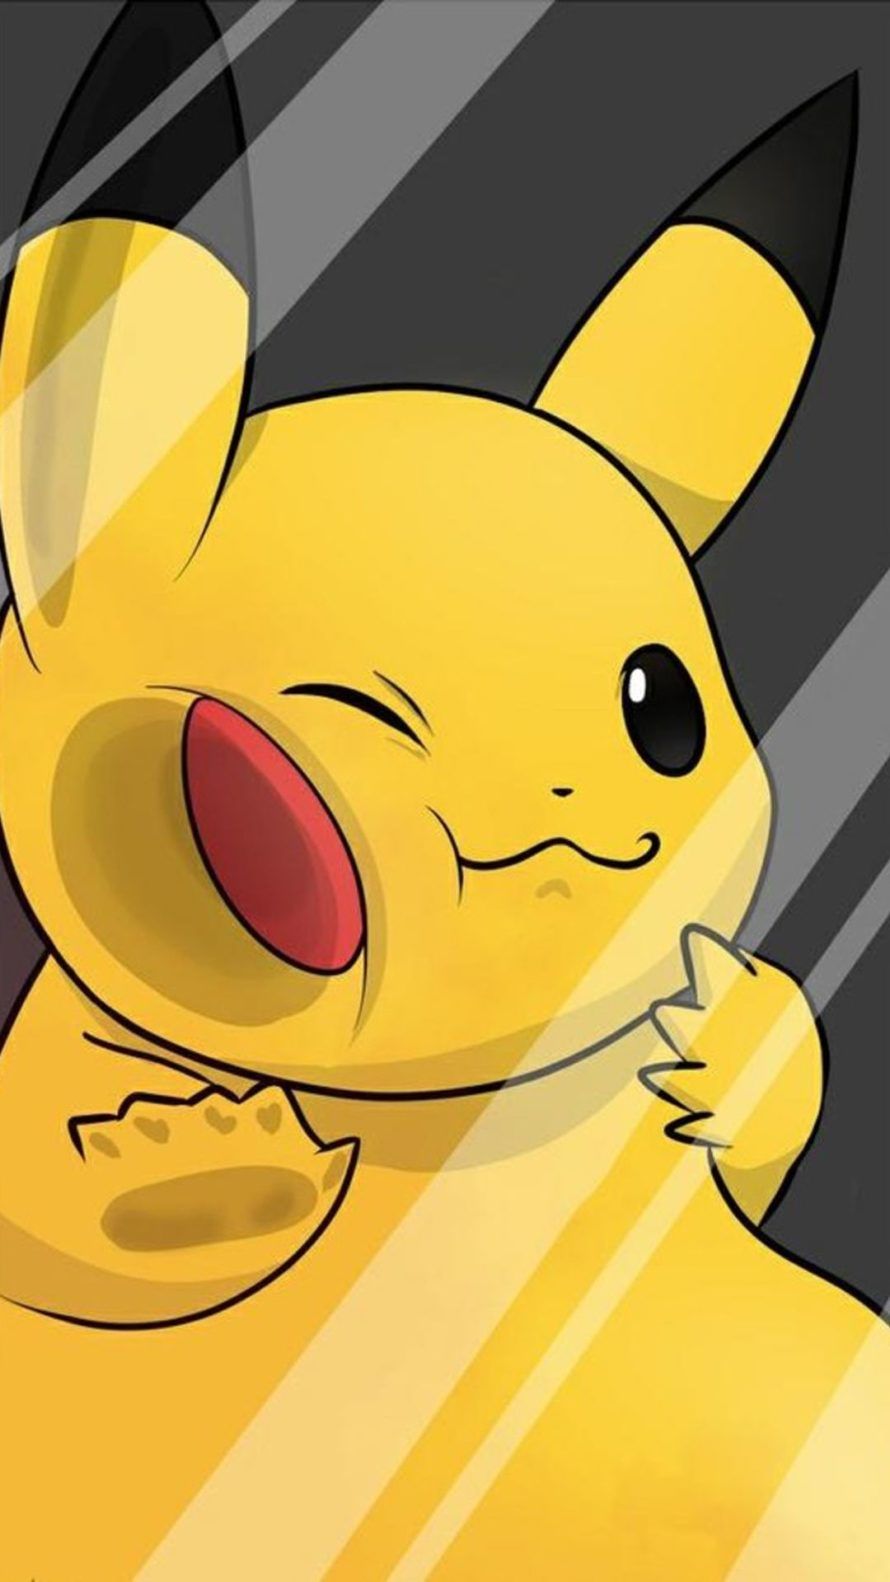 Pikachu Wallpaper iPhone 7